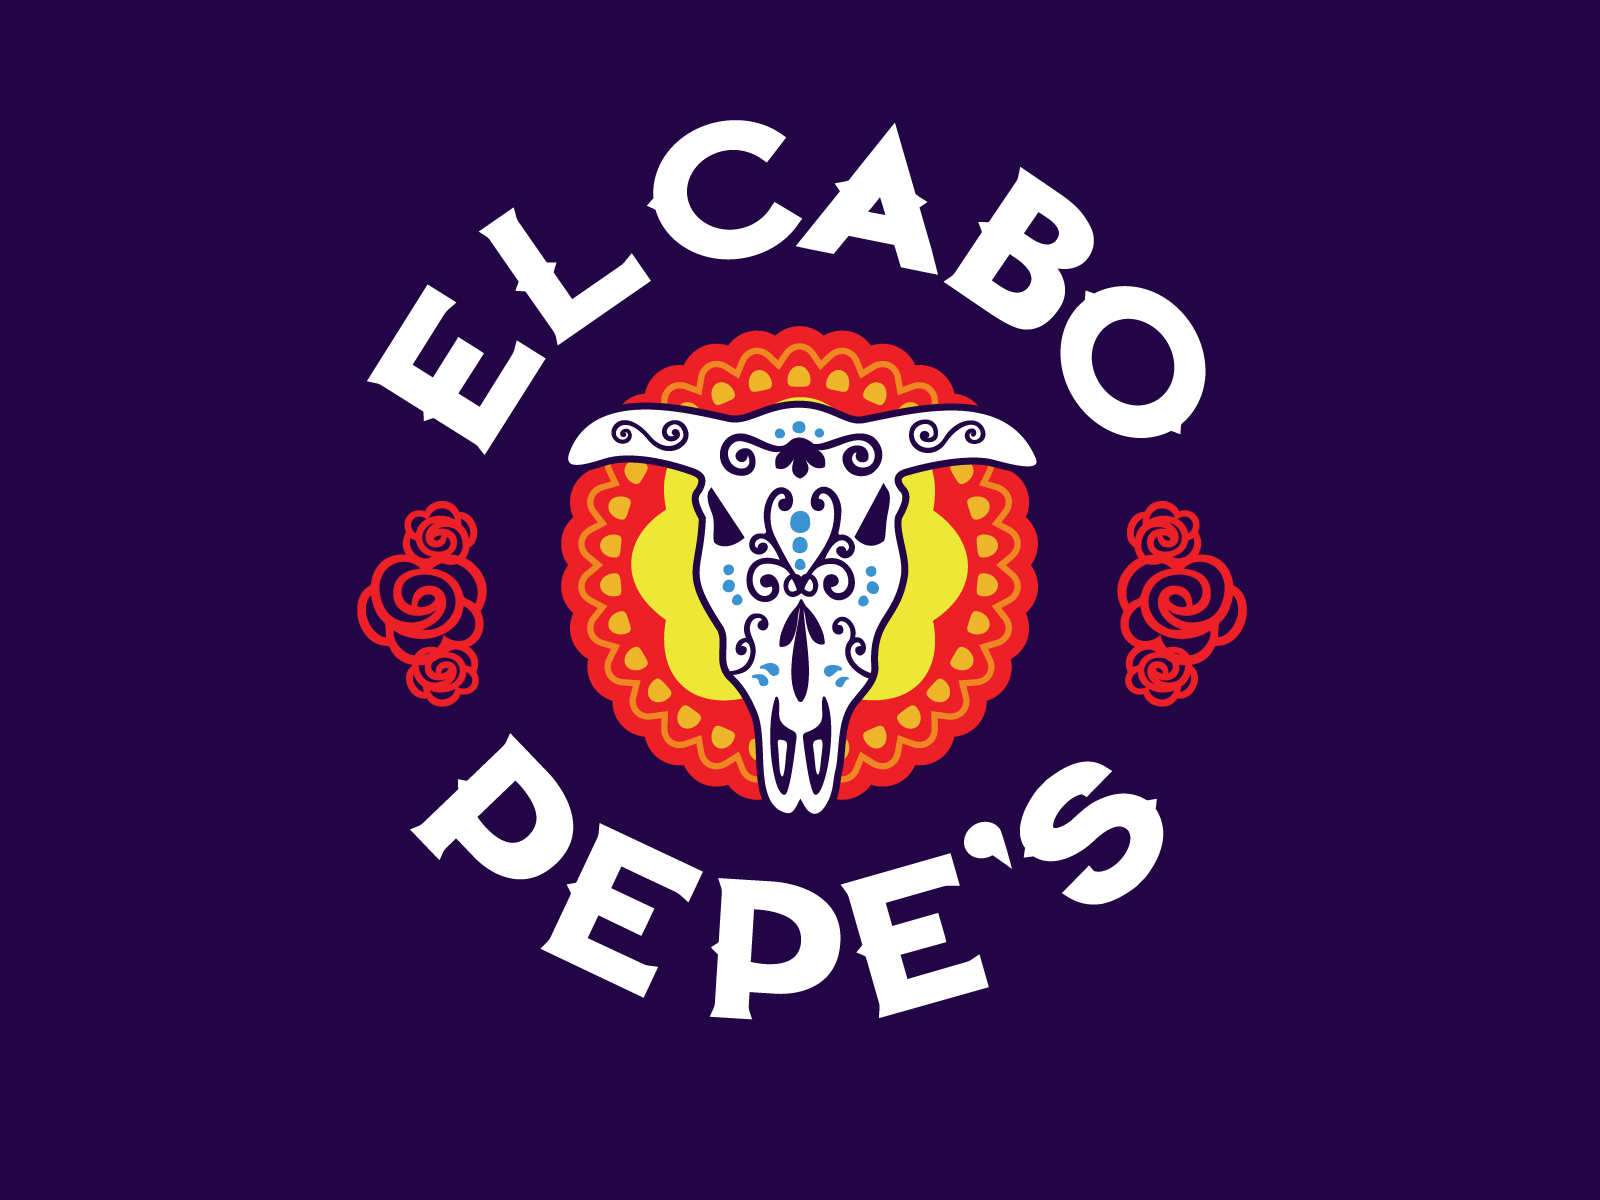 Rebrand of El Cabo Pepe's